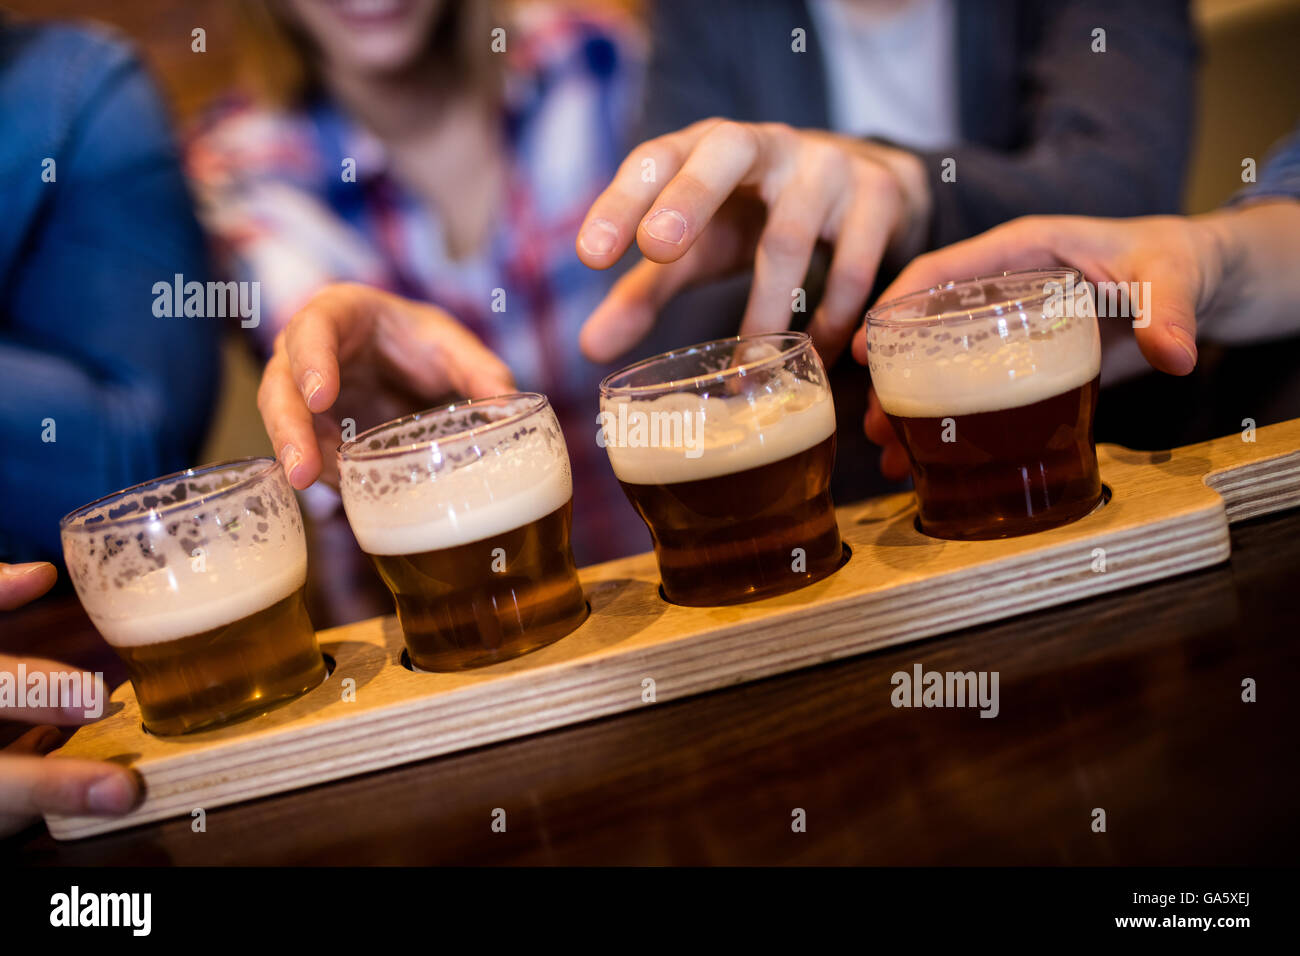 Friends taking beer glasses at restaurant Stock Photo